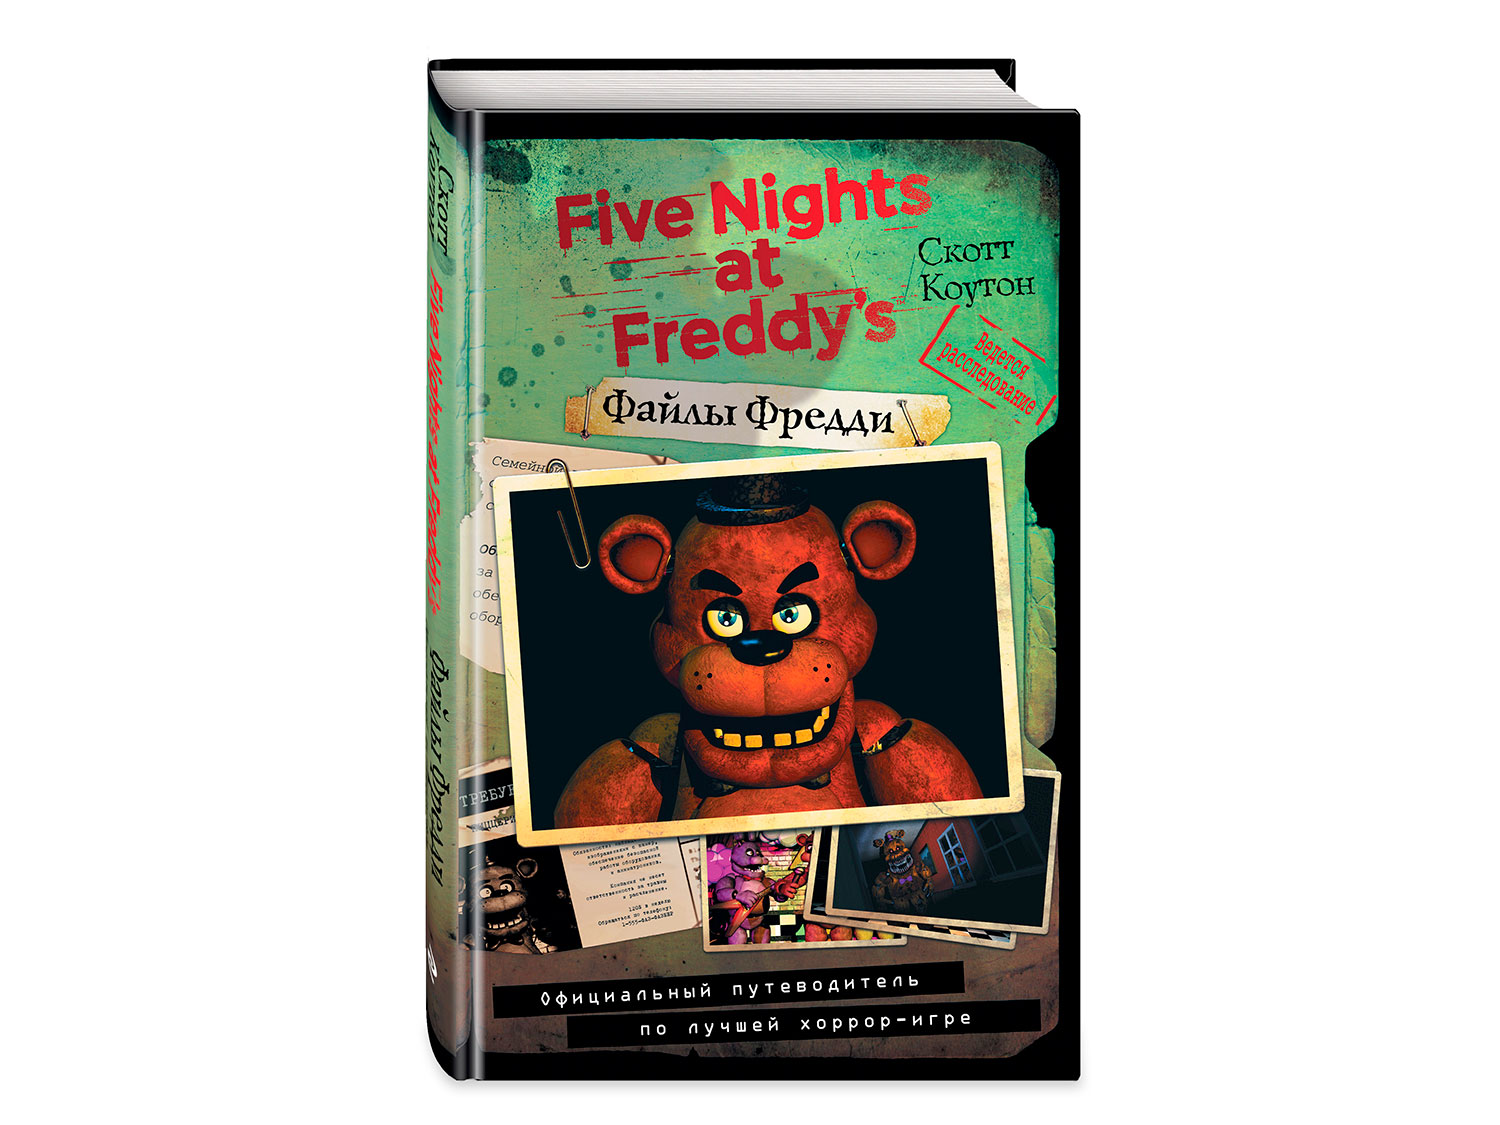 Книга фредди фнаф. Файлы Фредди. Five Nights at Freddy's файлы Фредди. Книга Фредди. Книга Five Nights at Freddy's файлы Фредди.